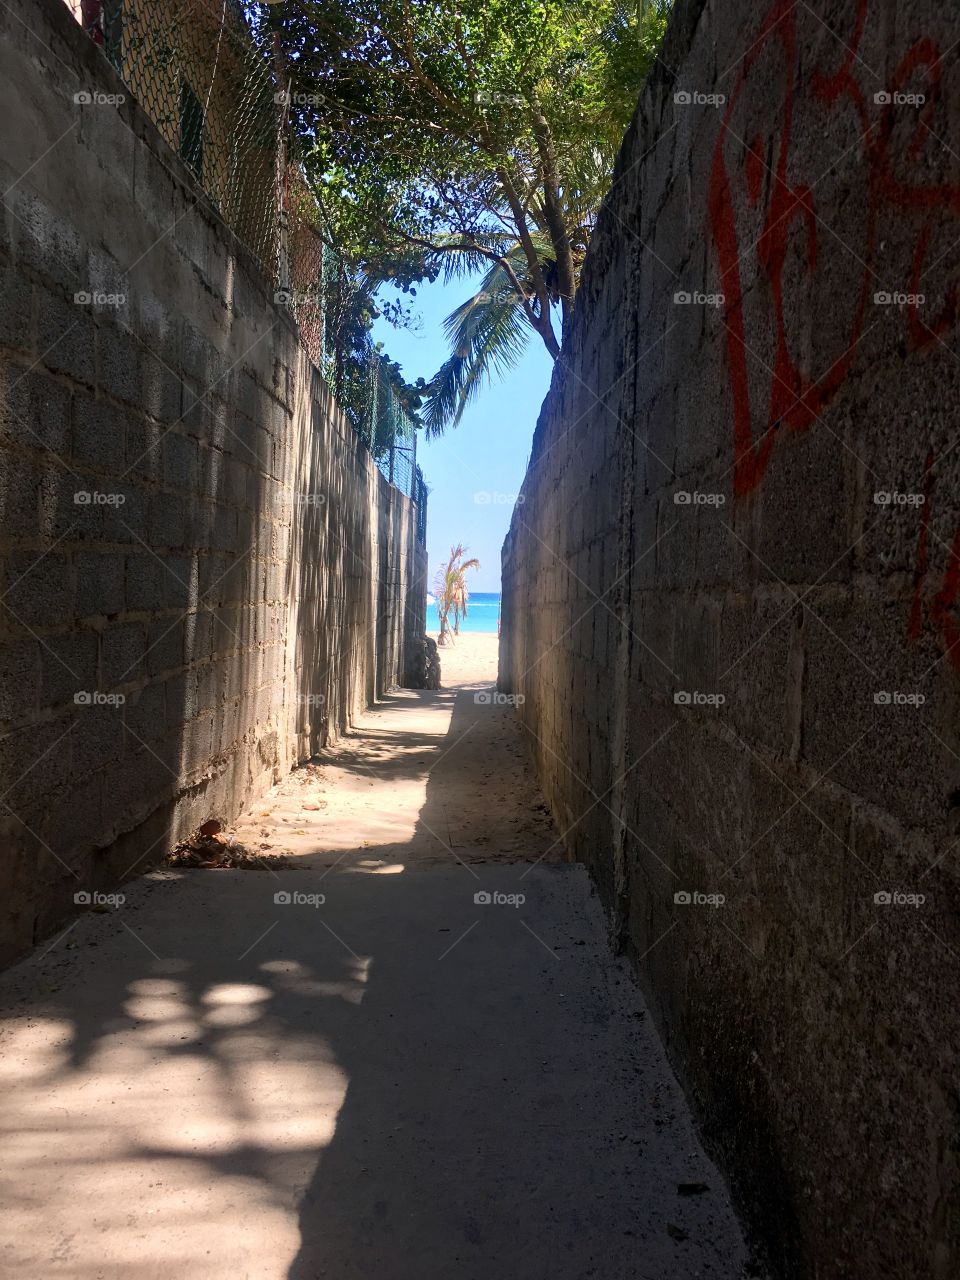 Caribbean alleys 